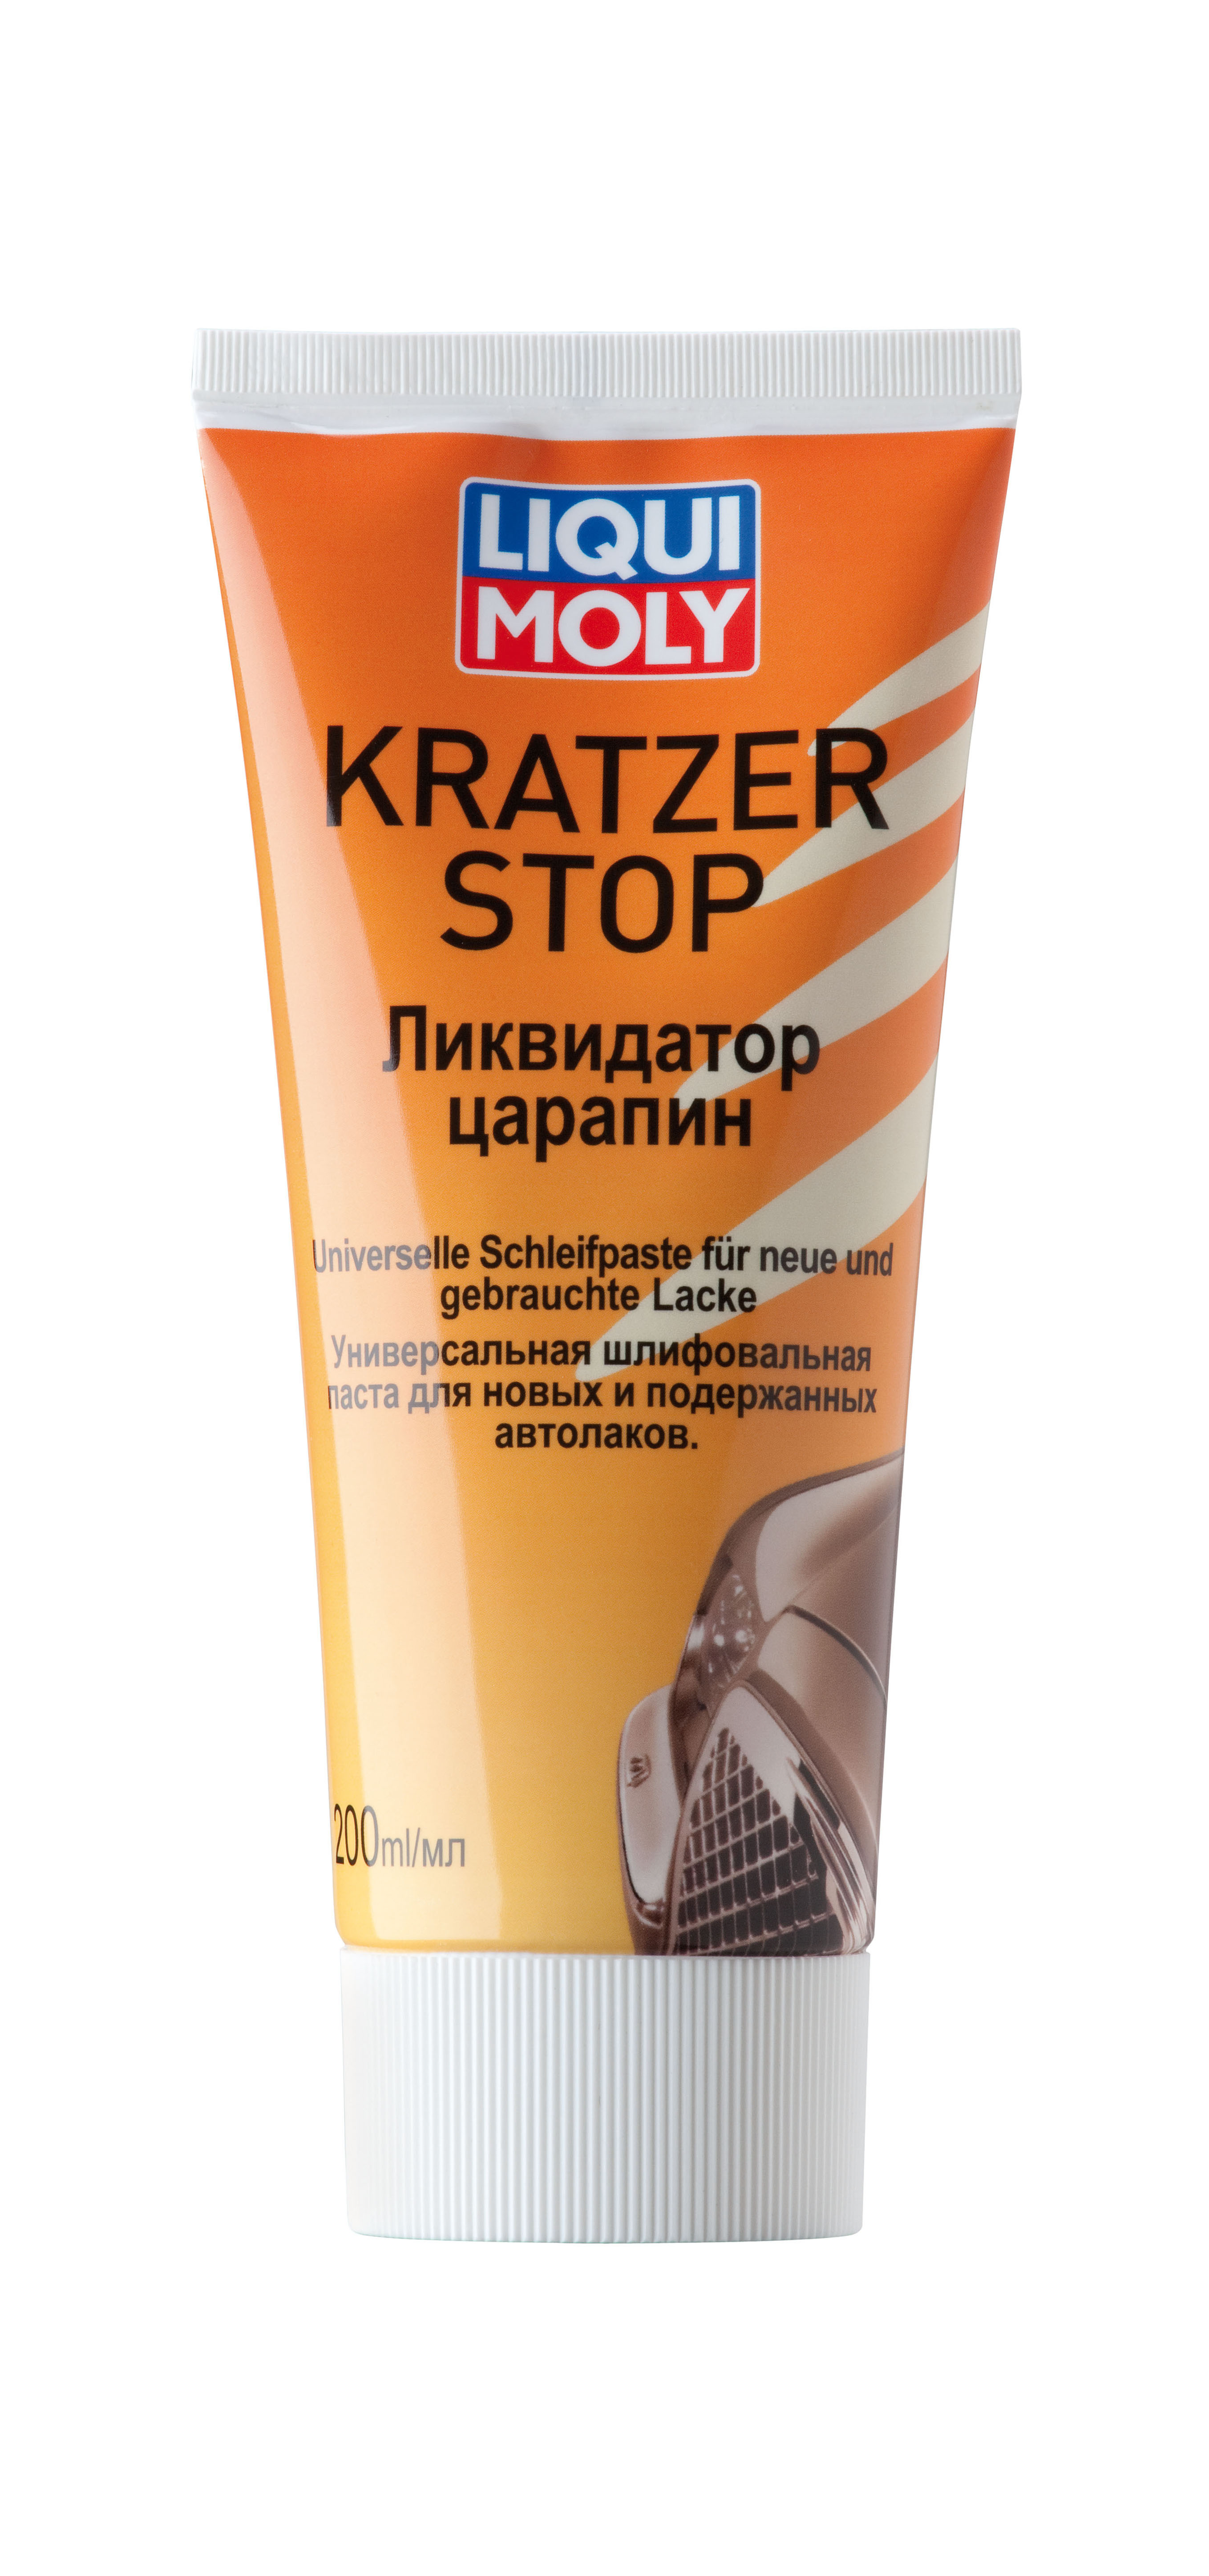 Ликвидатор царапин LIQUI MOLY Kratzer Stop (0,2 литра)